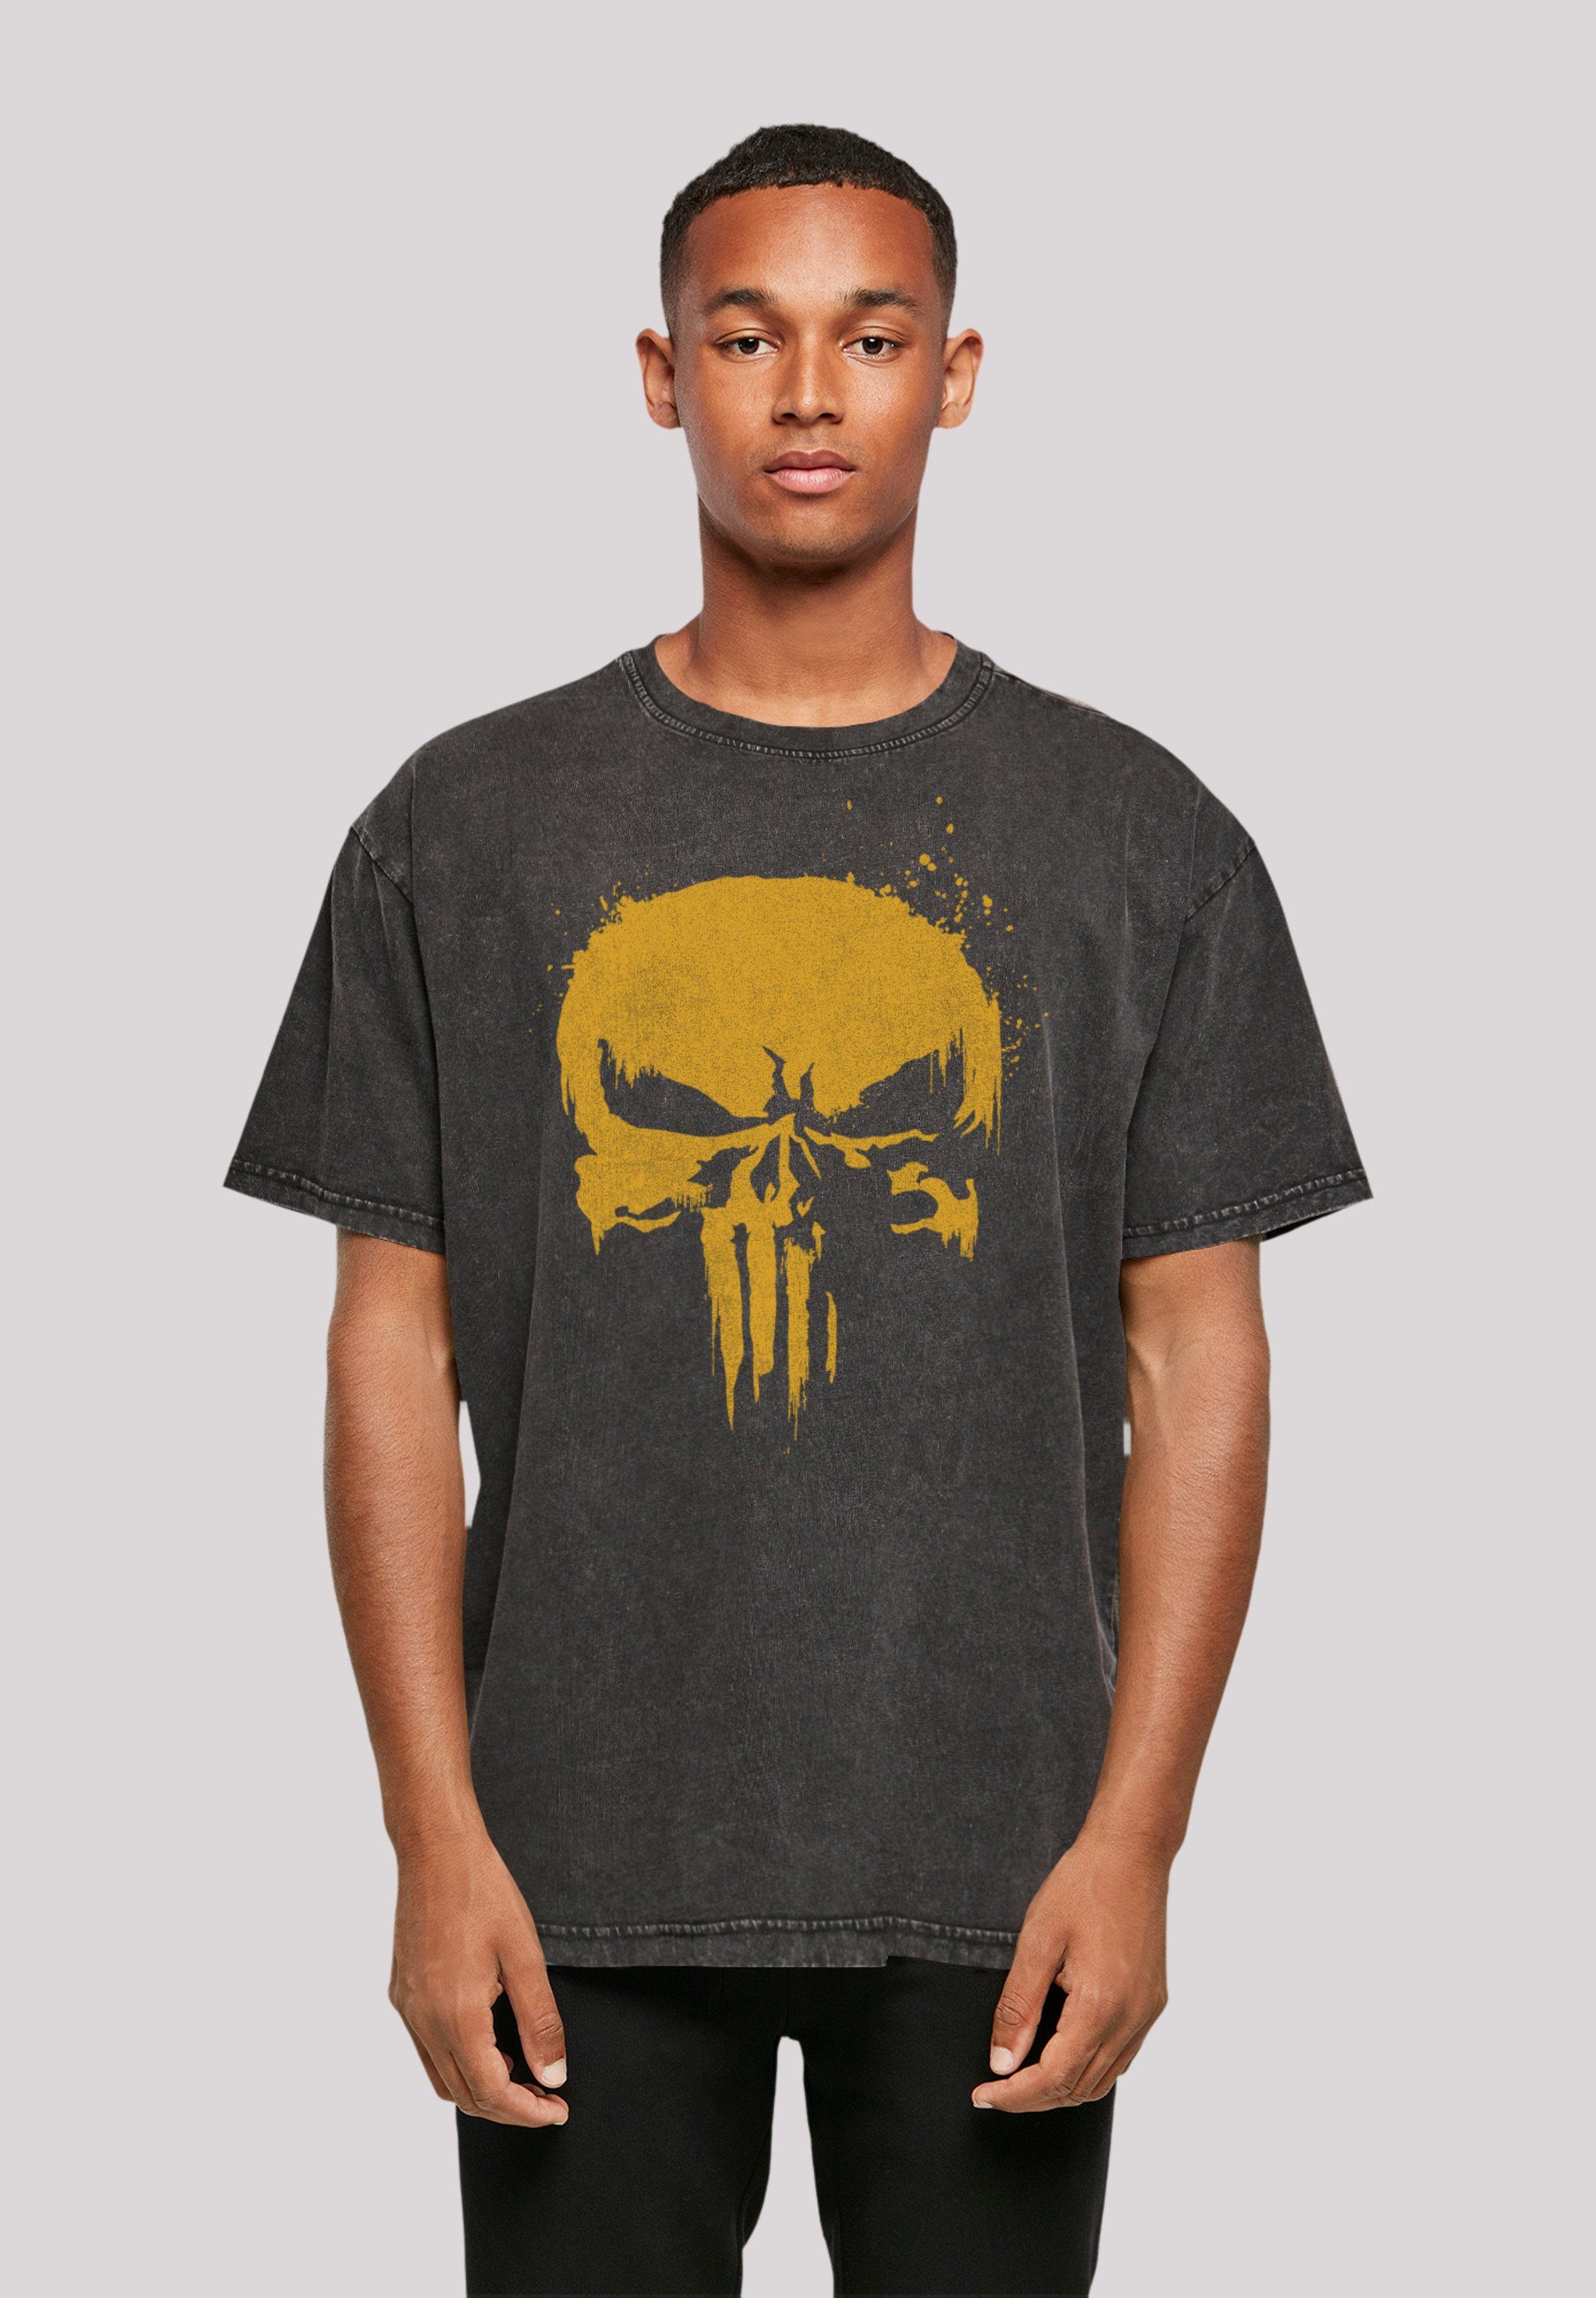 F4NT4STIC T-Shirt Marvel Punisher Gold Premium Qualität, Offiziell  lizenziertes Marvel T-Shirt